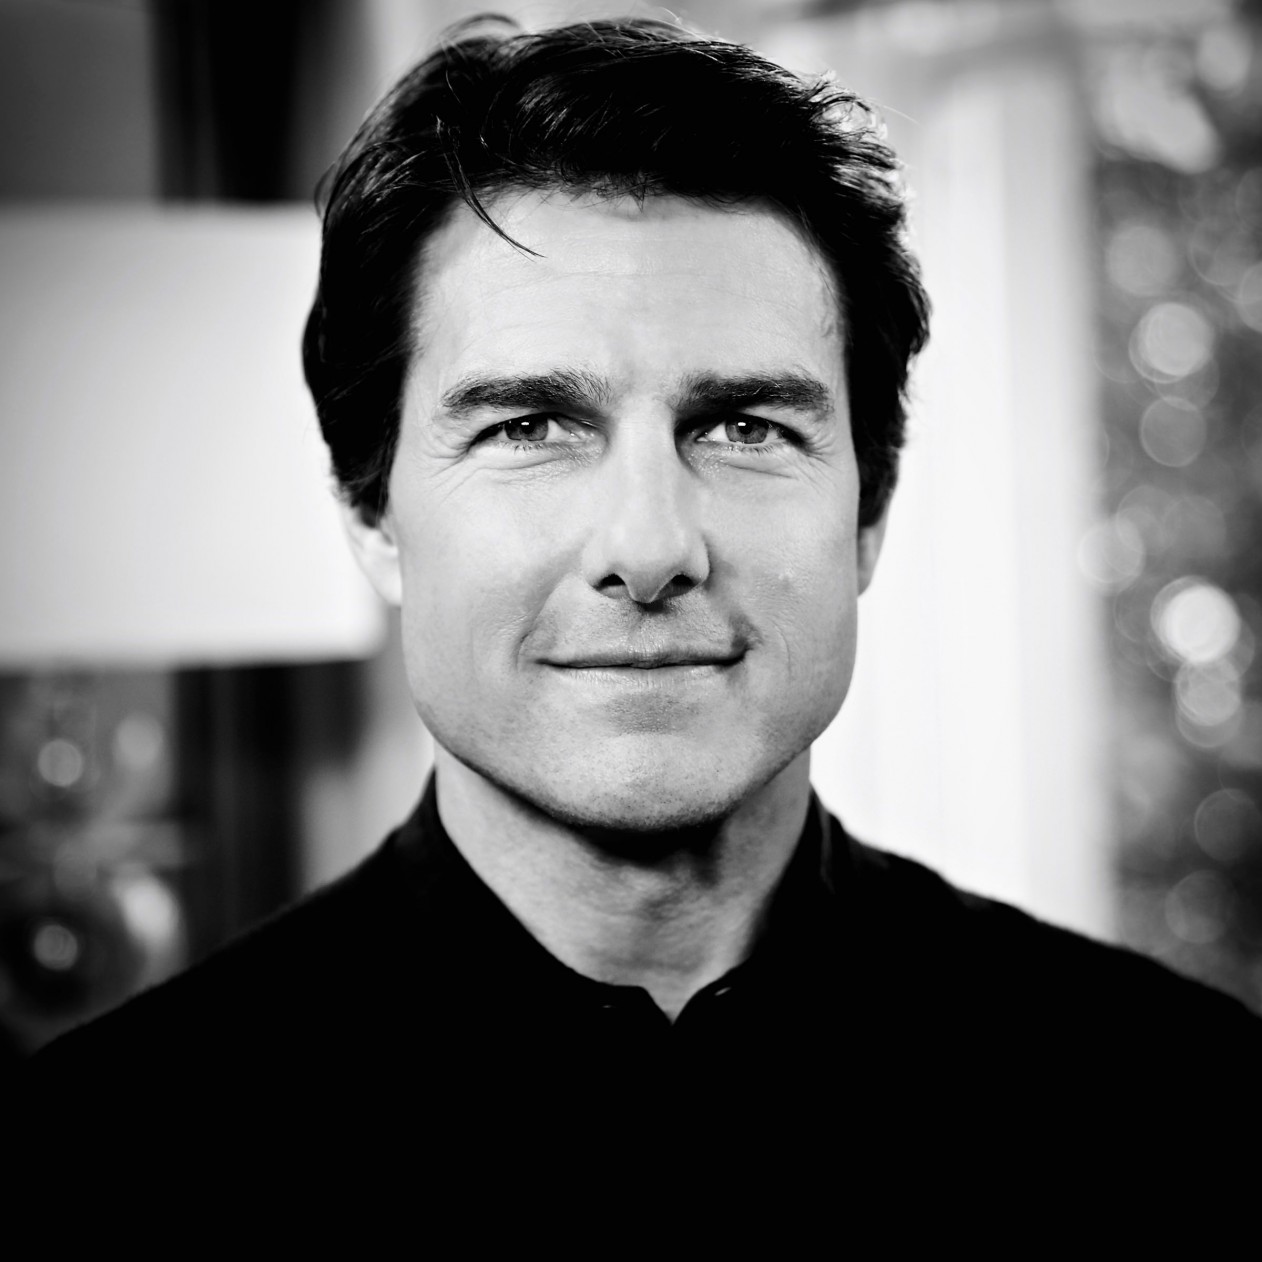 Tom Cruise Black & White Portrait Wallpaper for Apple iPad mini